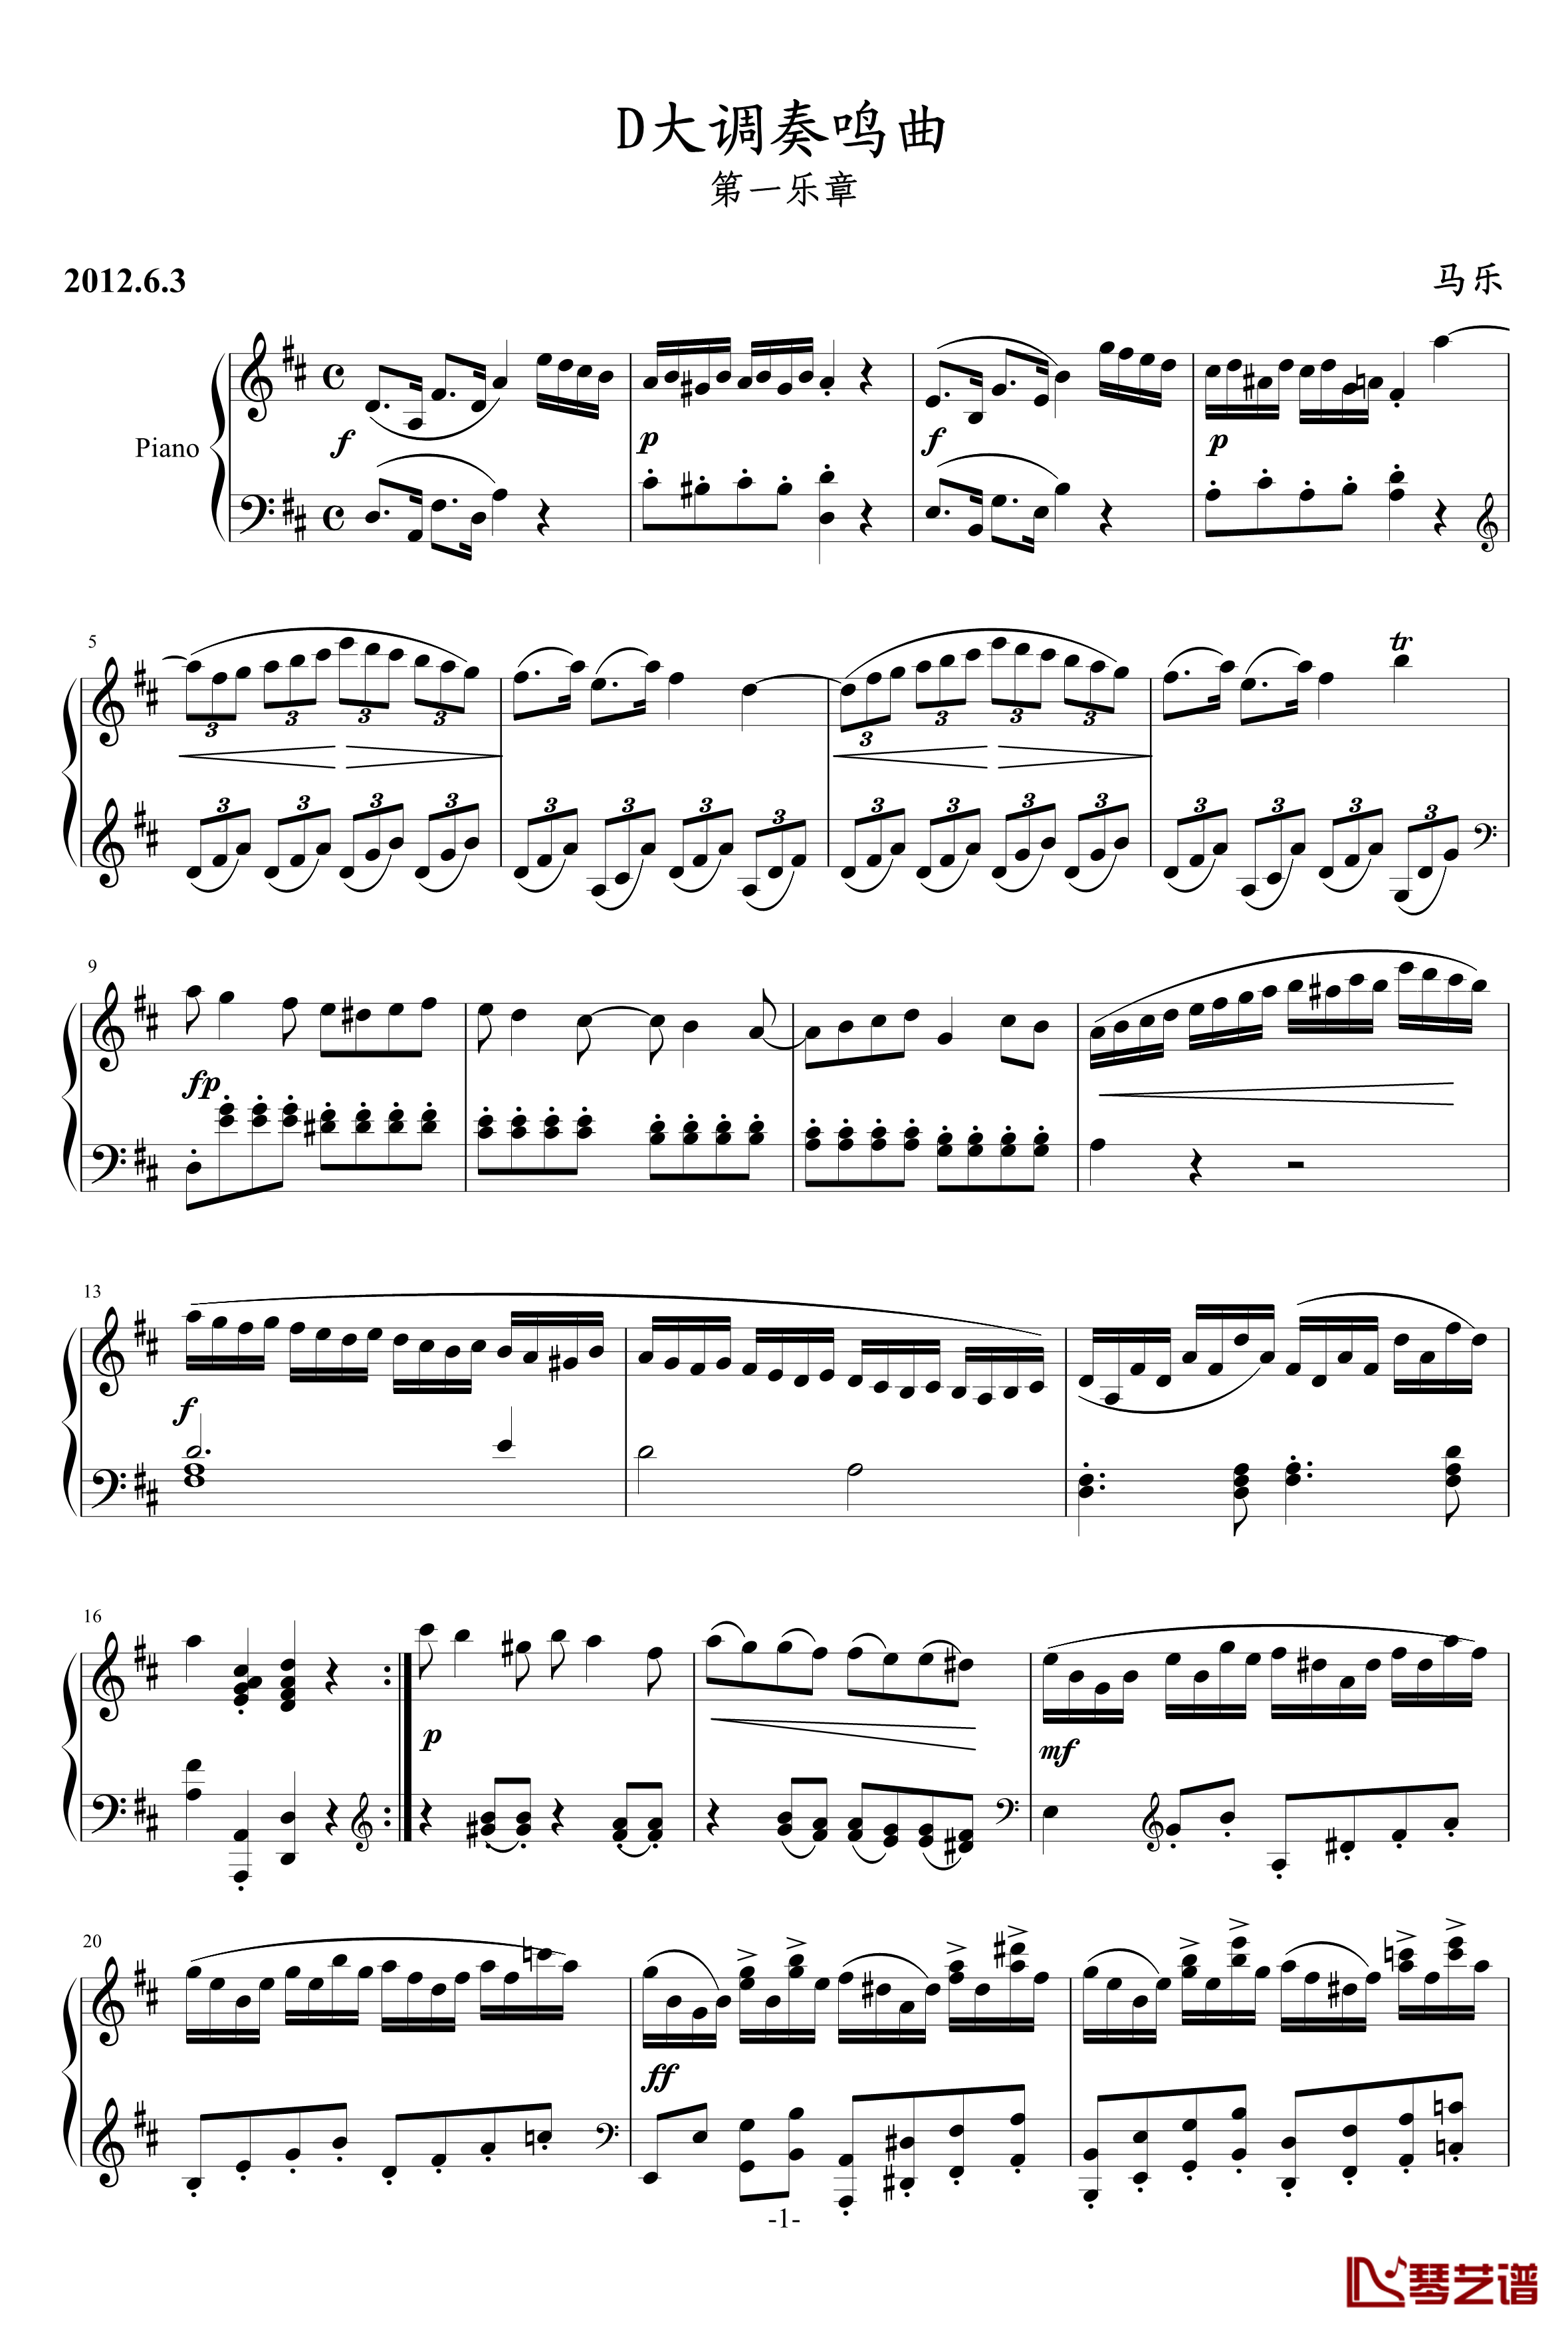 D大调奏鸣曲钢琴谱-第一乐章-乐之琴1